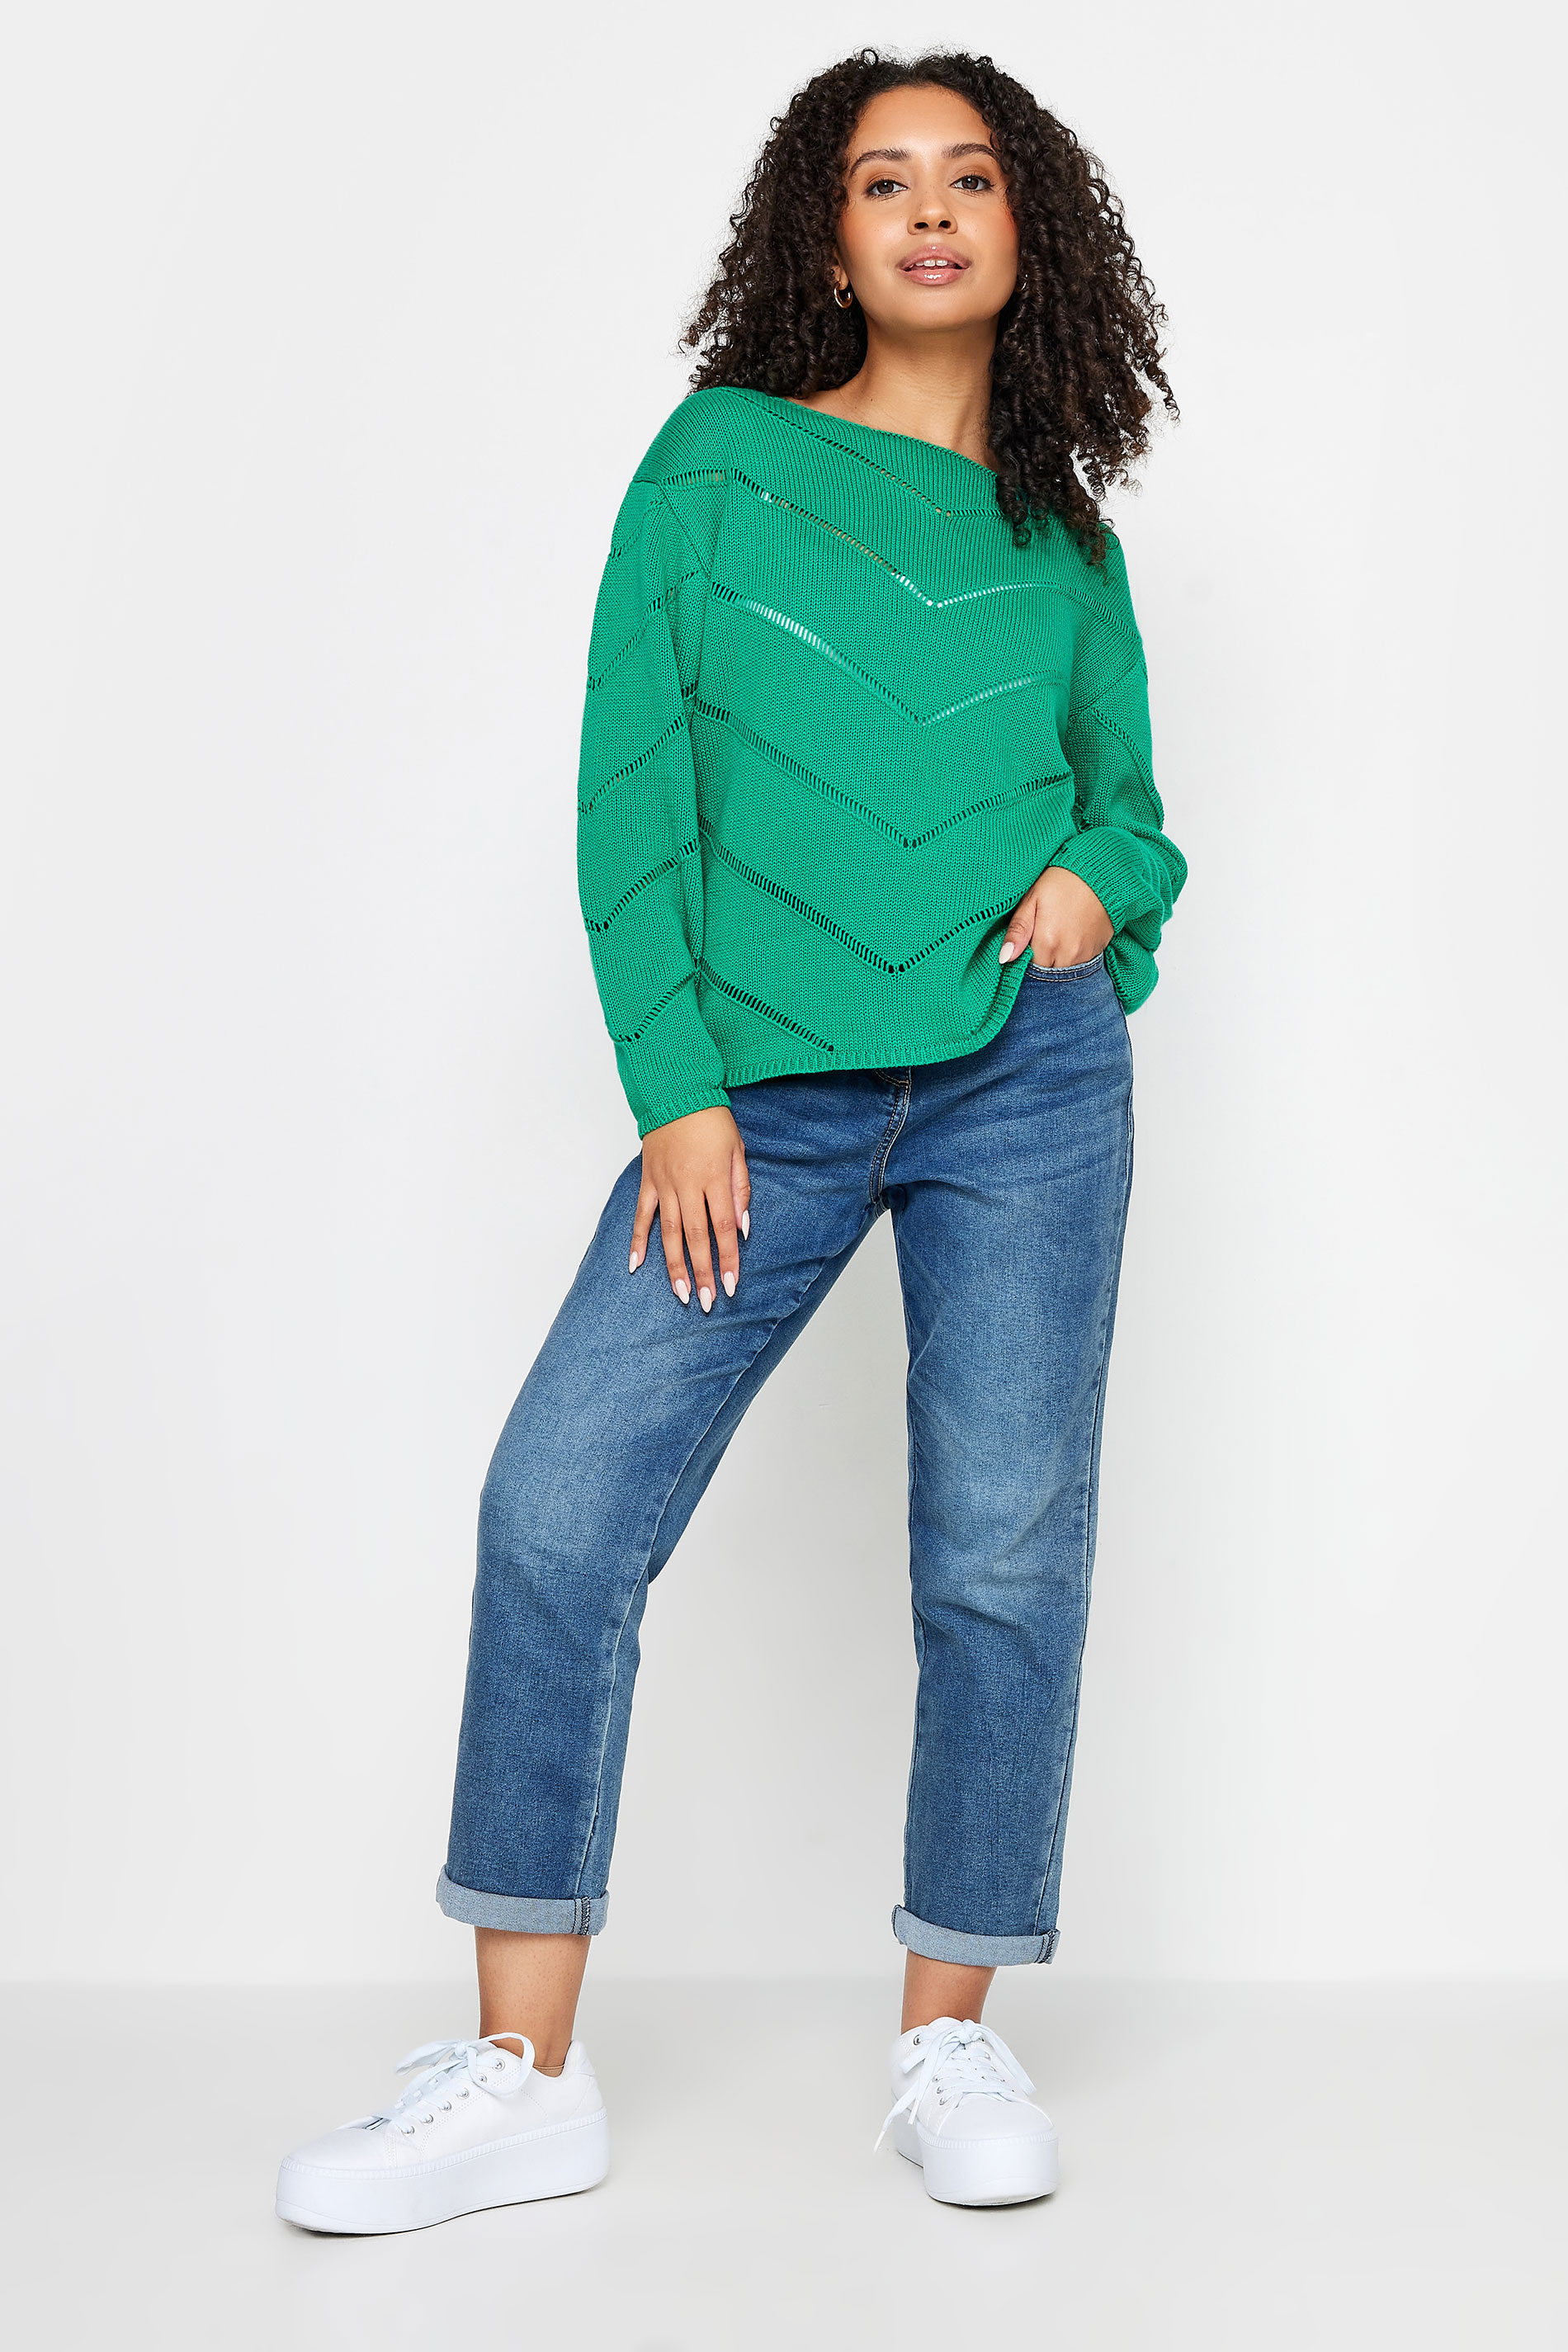 M&Co Petite Green V Patterned Knit Jumper | M&Co 2